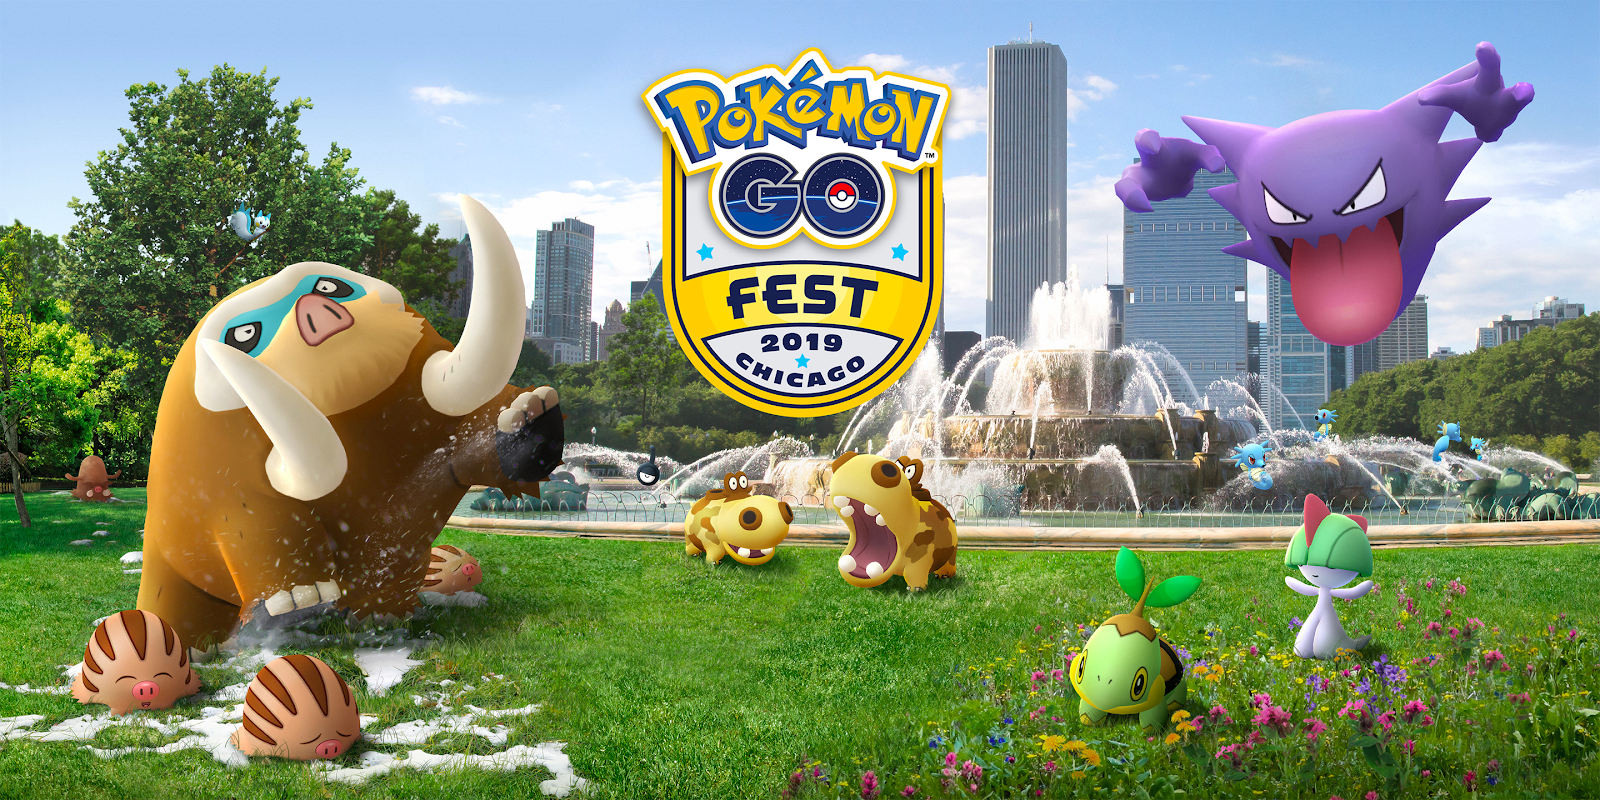 Pokemon News - GO avatar items, GO Fest Chicago ticket info, Niantic